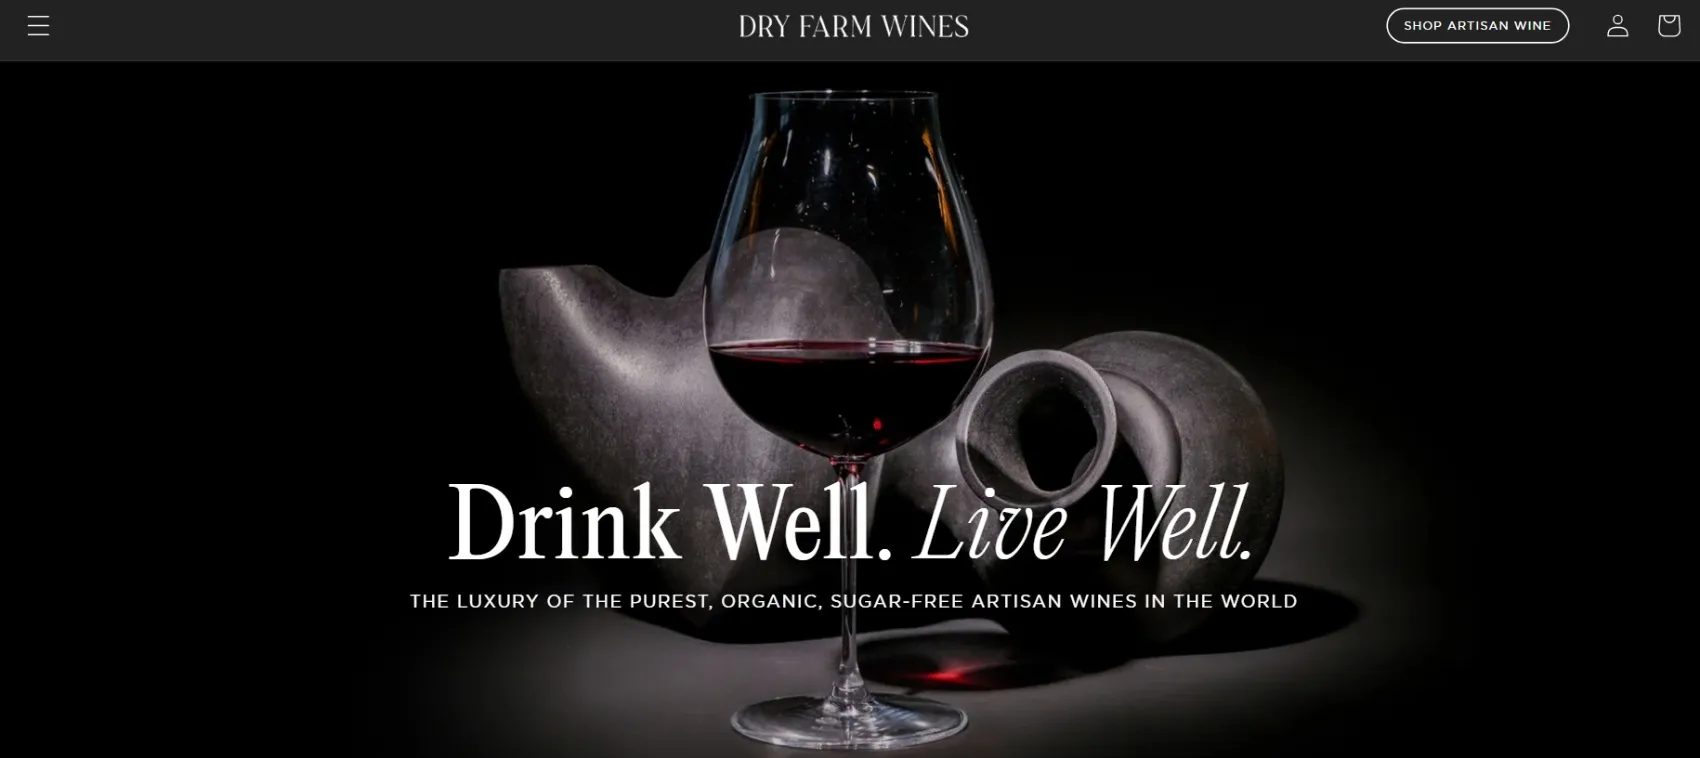 Dry Farm Wines